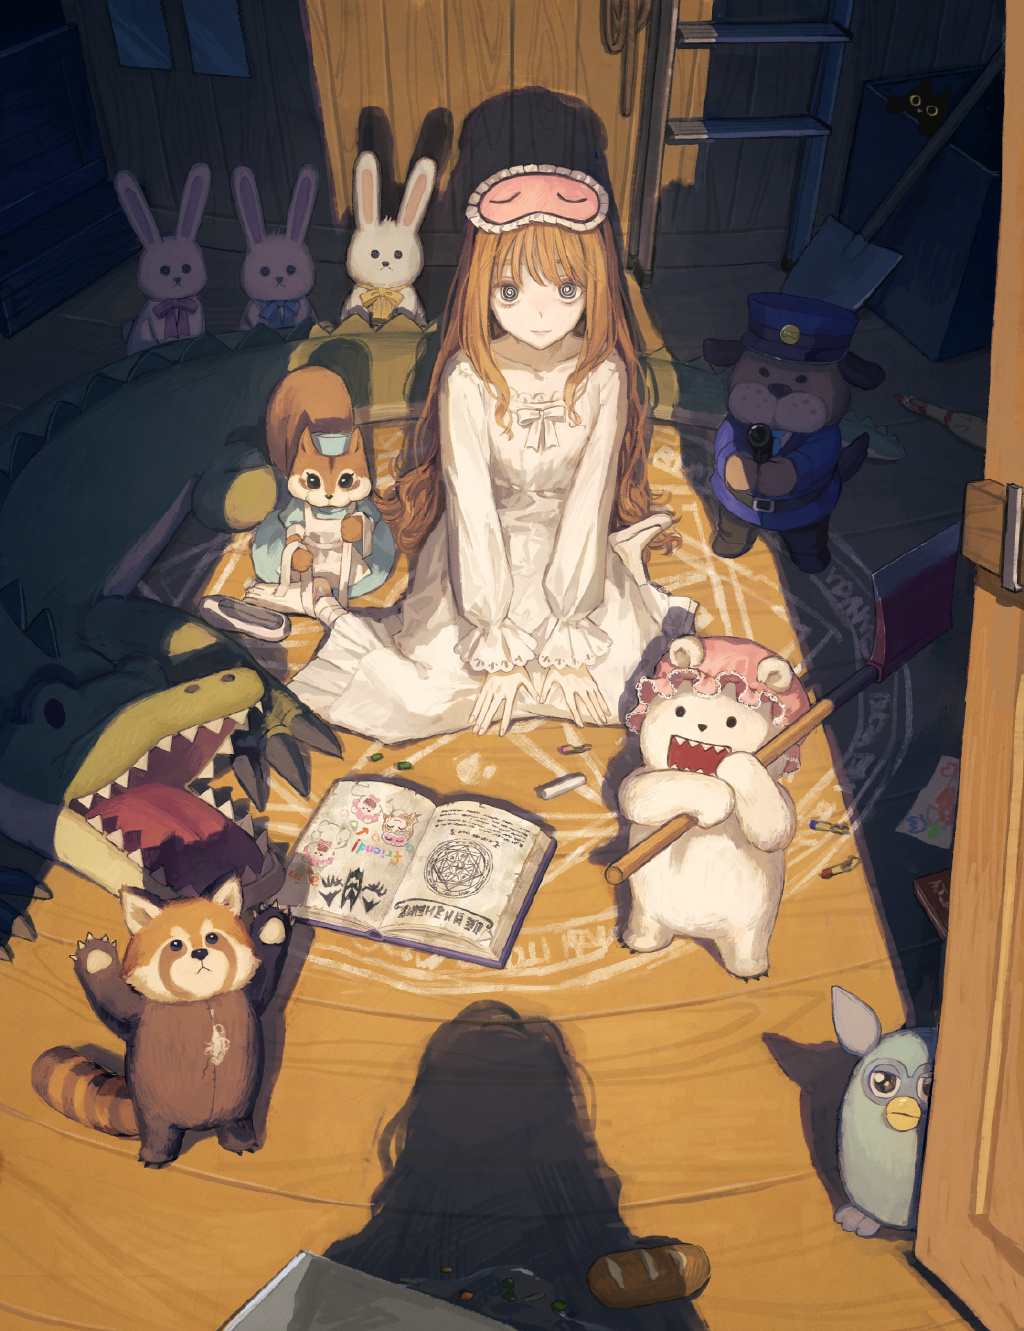 【P站画师】月球上的兔子少女！日本画师寿なし子的插画作品 - ACG17.COM